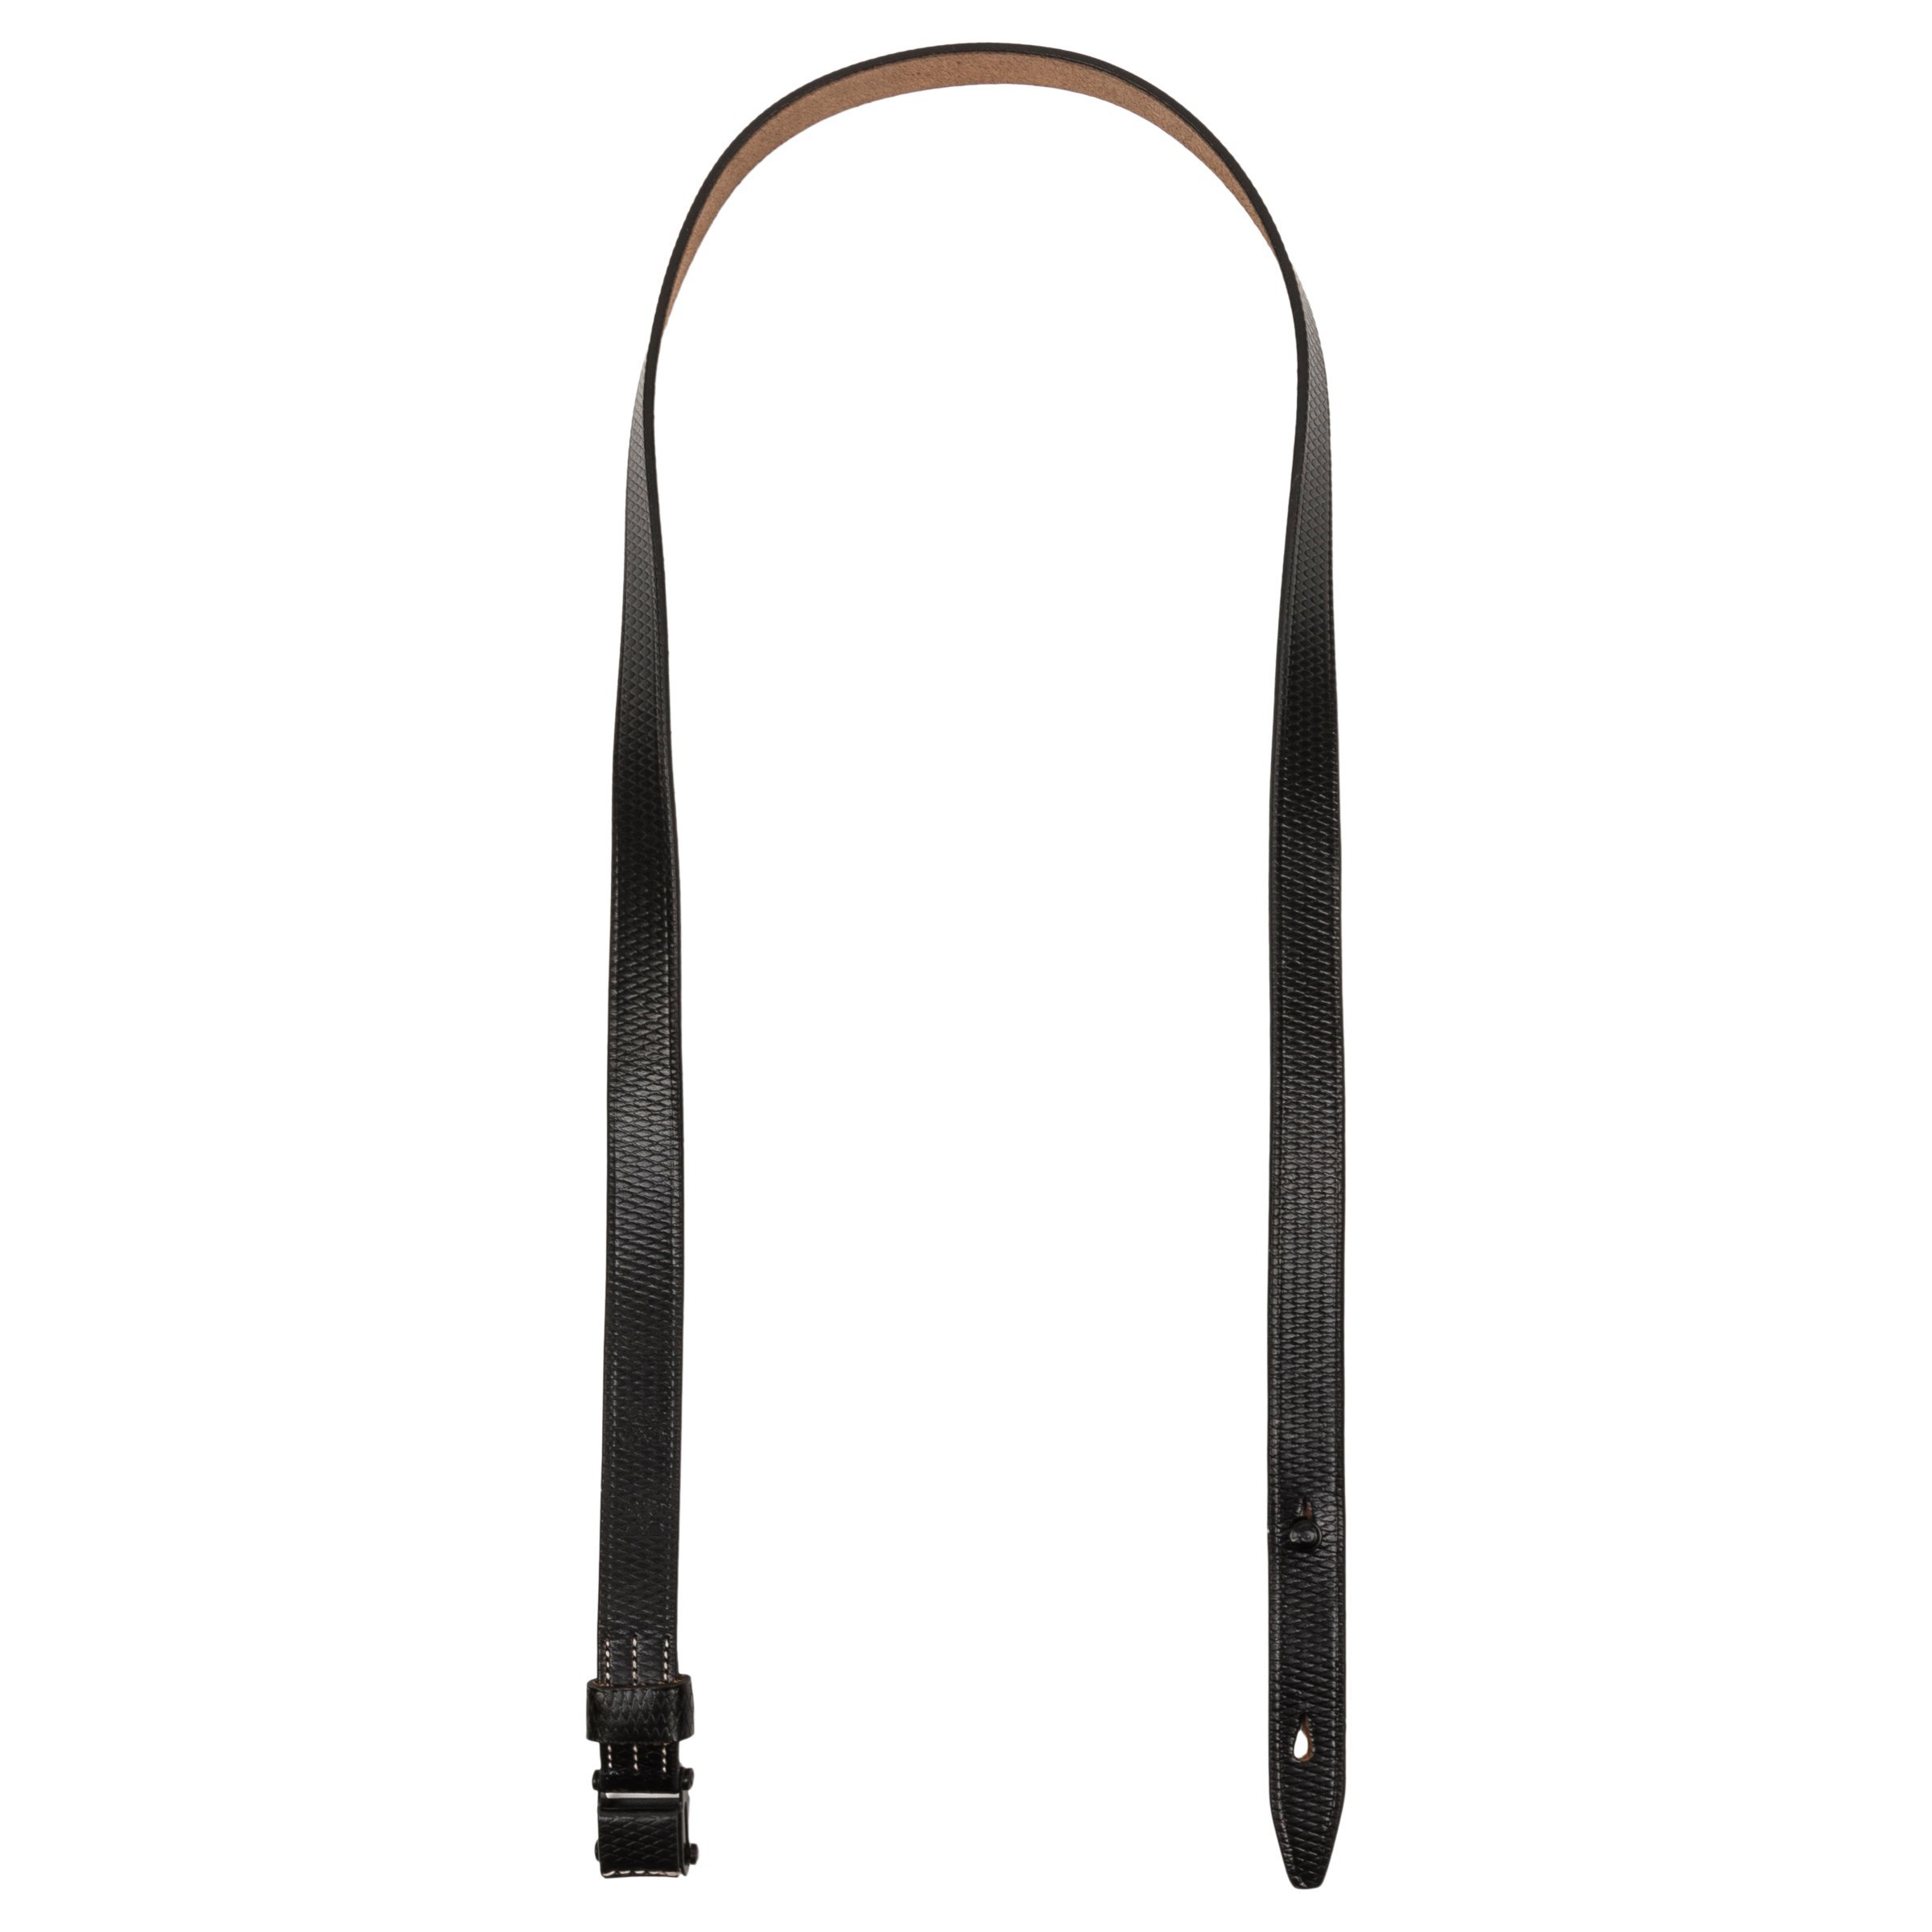 MP38/MP40 black carrying sling - repro 13,75 € | Nestof.pl